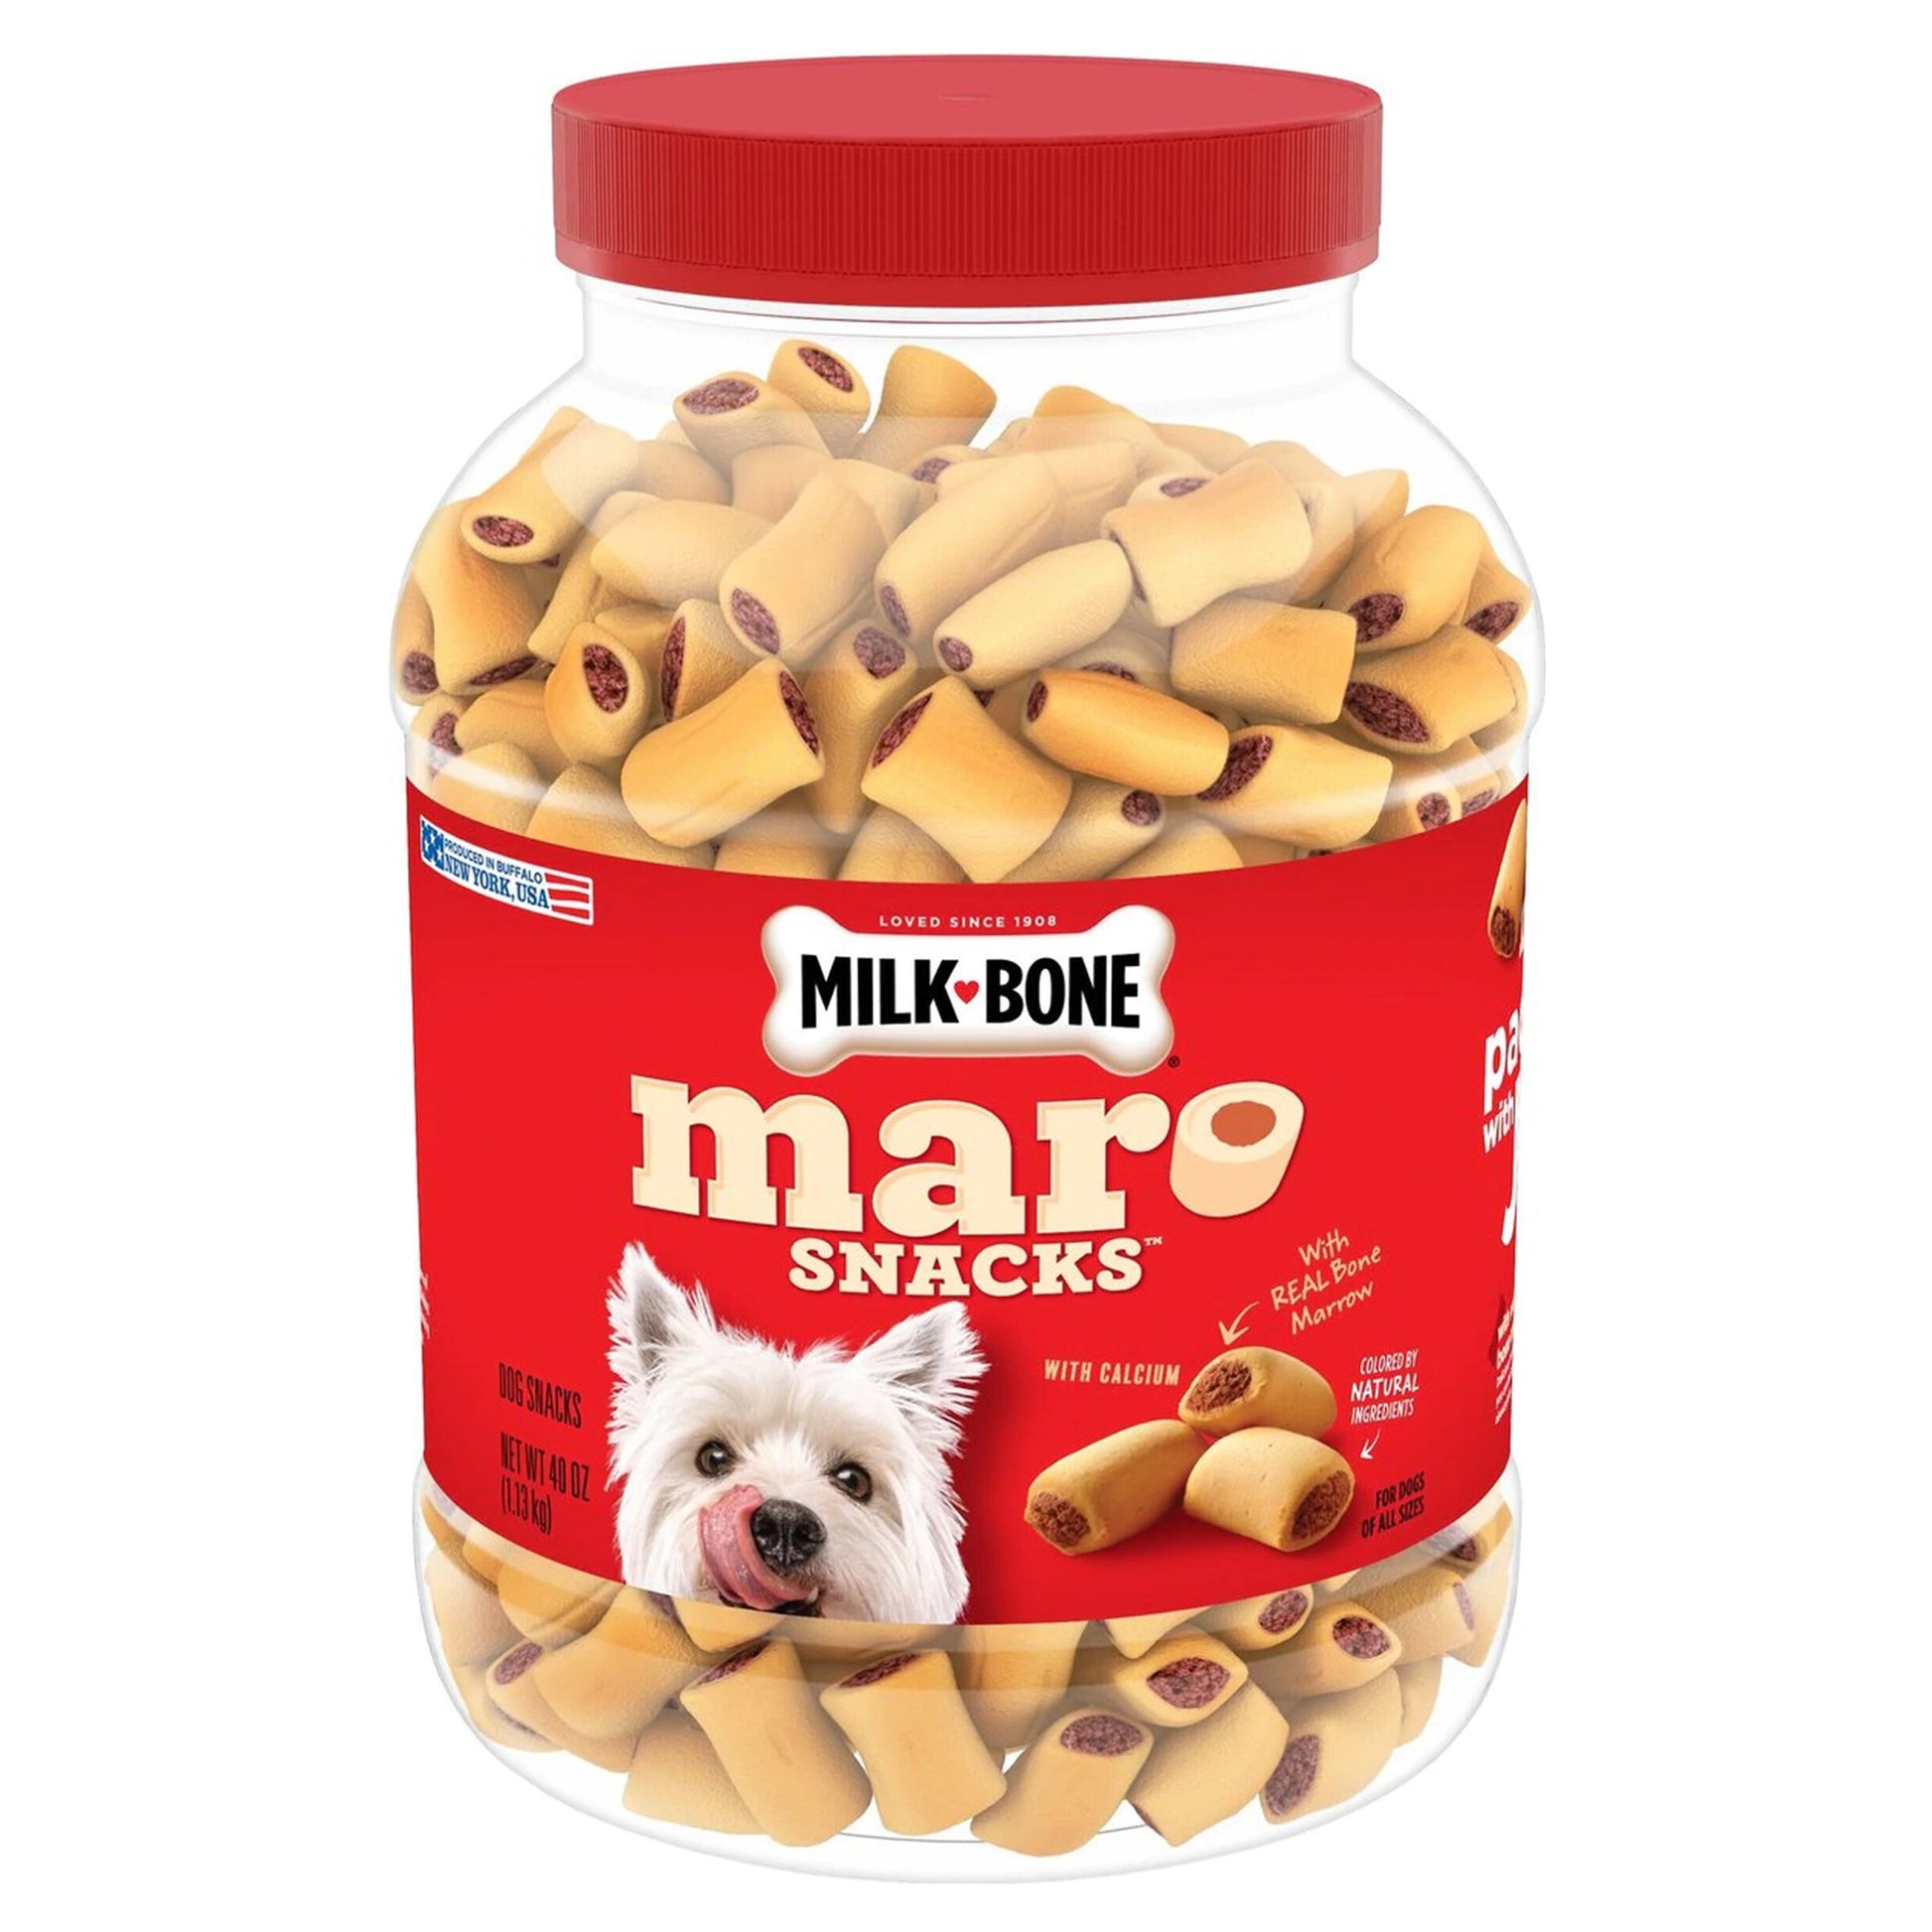 Milk-Bone MaroSnacks Dog Treat 40 oz, Milk-Bone